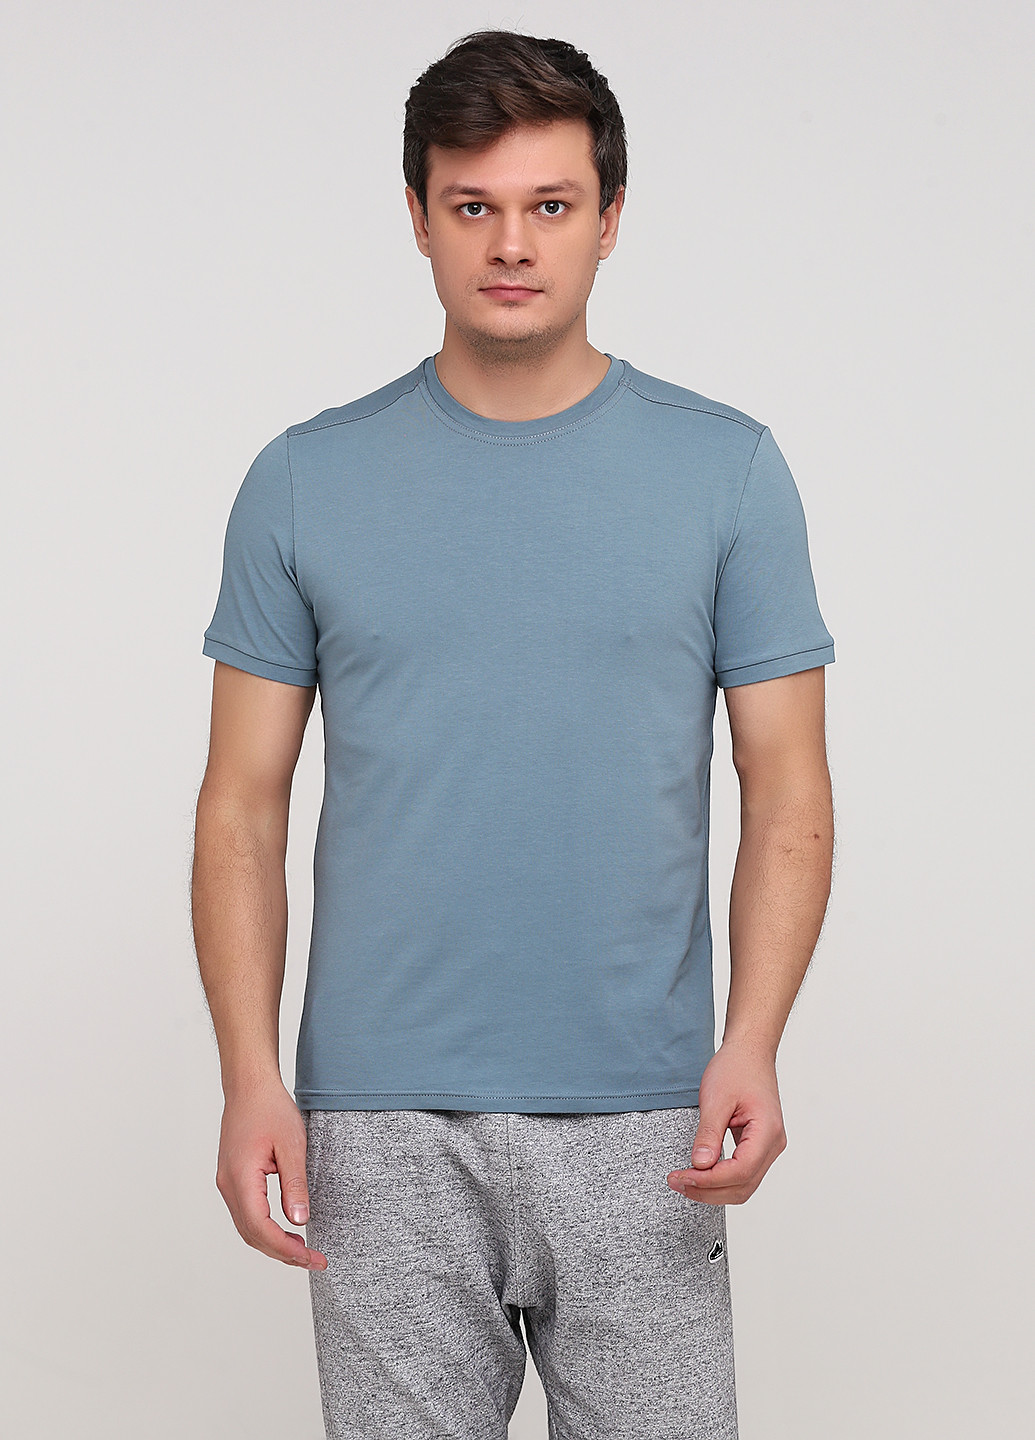 Темно-голубая футболка мужская 19м440-24 Malta